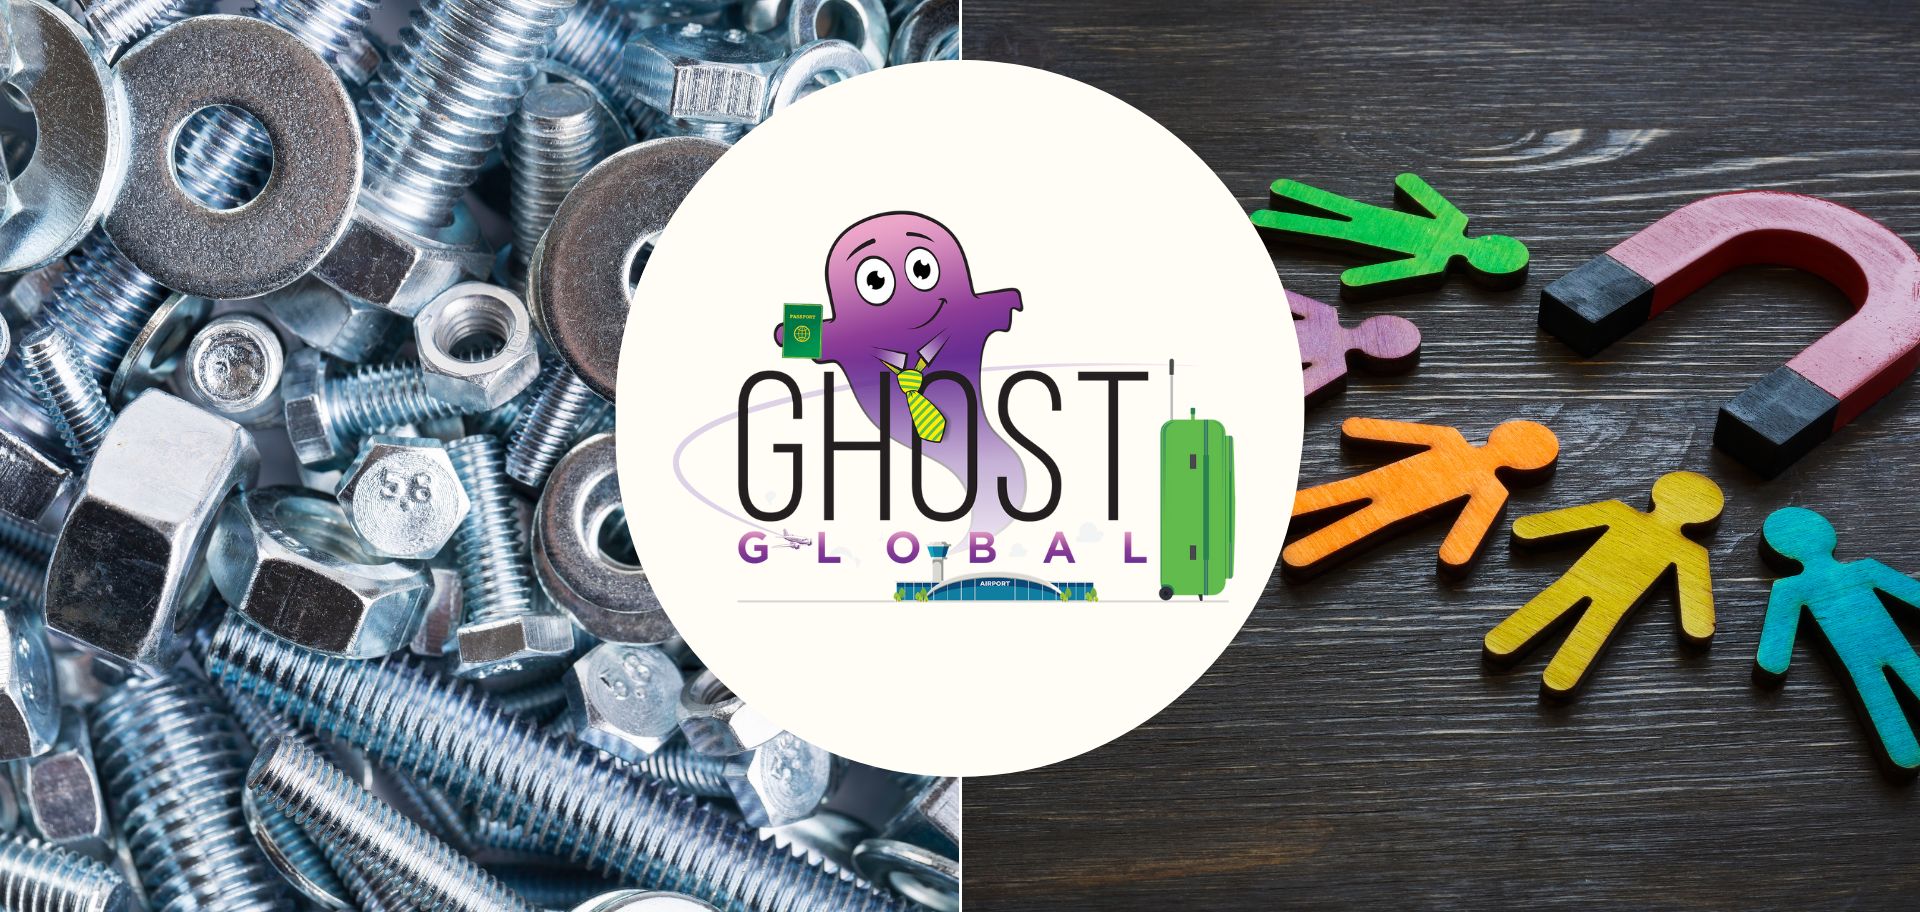 Ghost Global: Go Big or Go Bolt-On